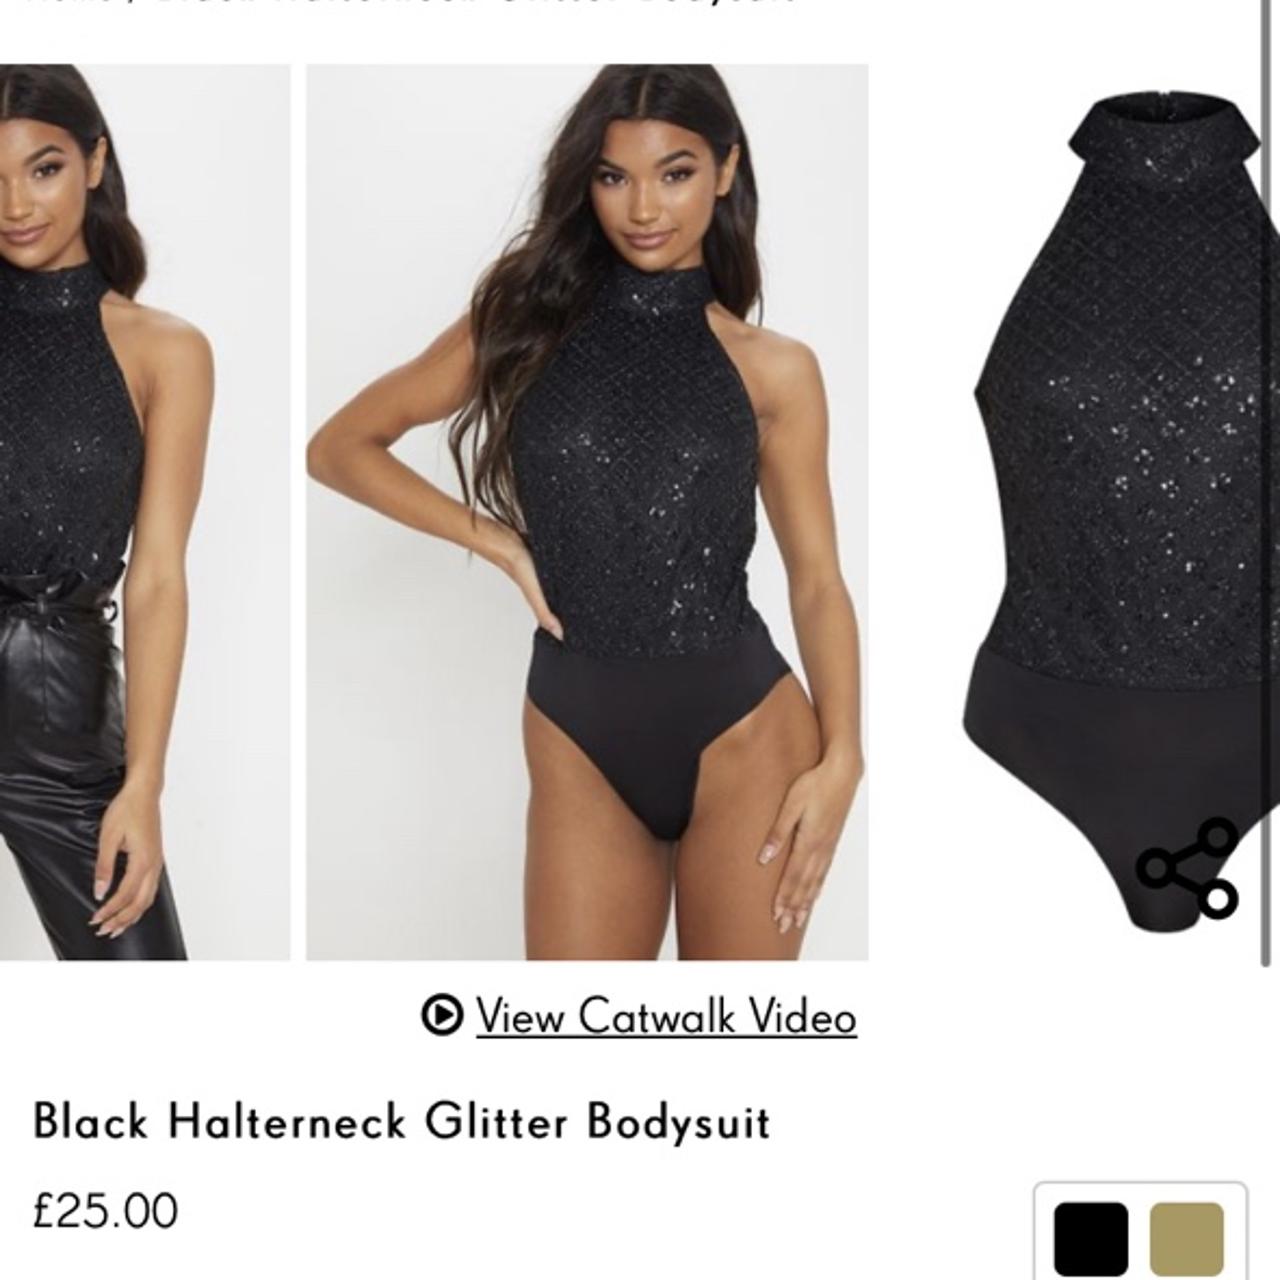 Black Halterneck Glitter Bodysuit